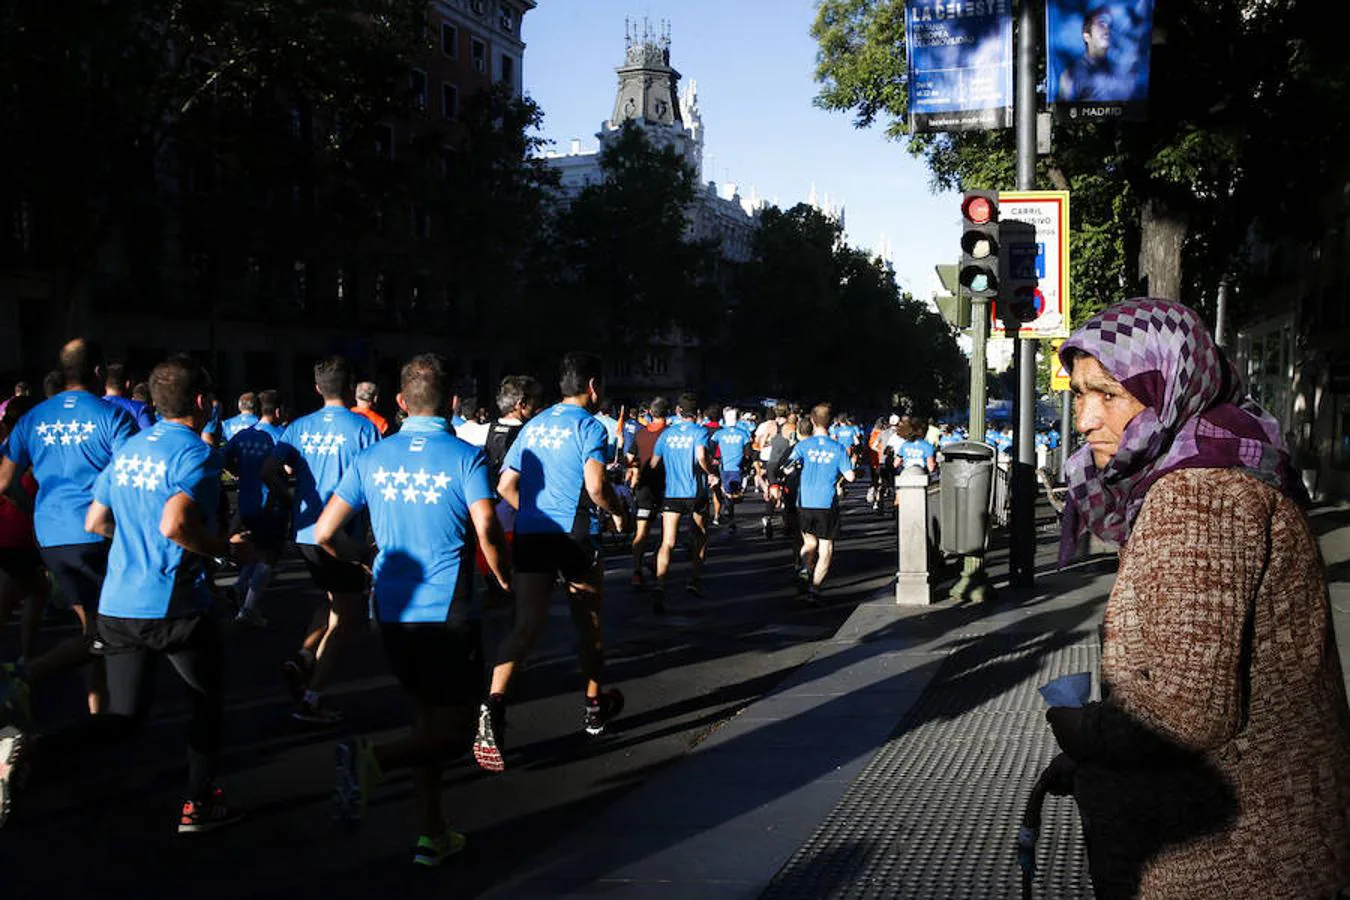 Madrid ha sido azul esta mañana gracias a miles de atletas populares